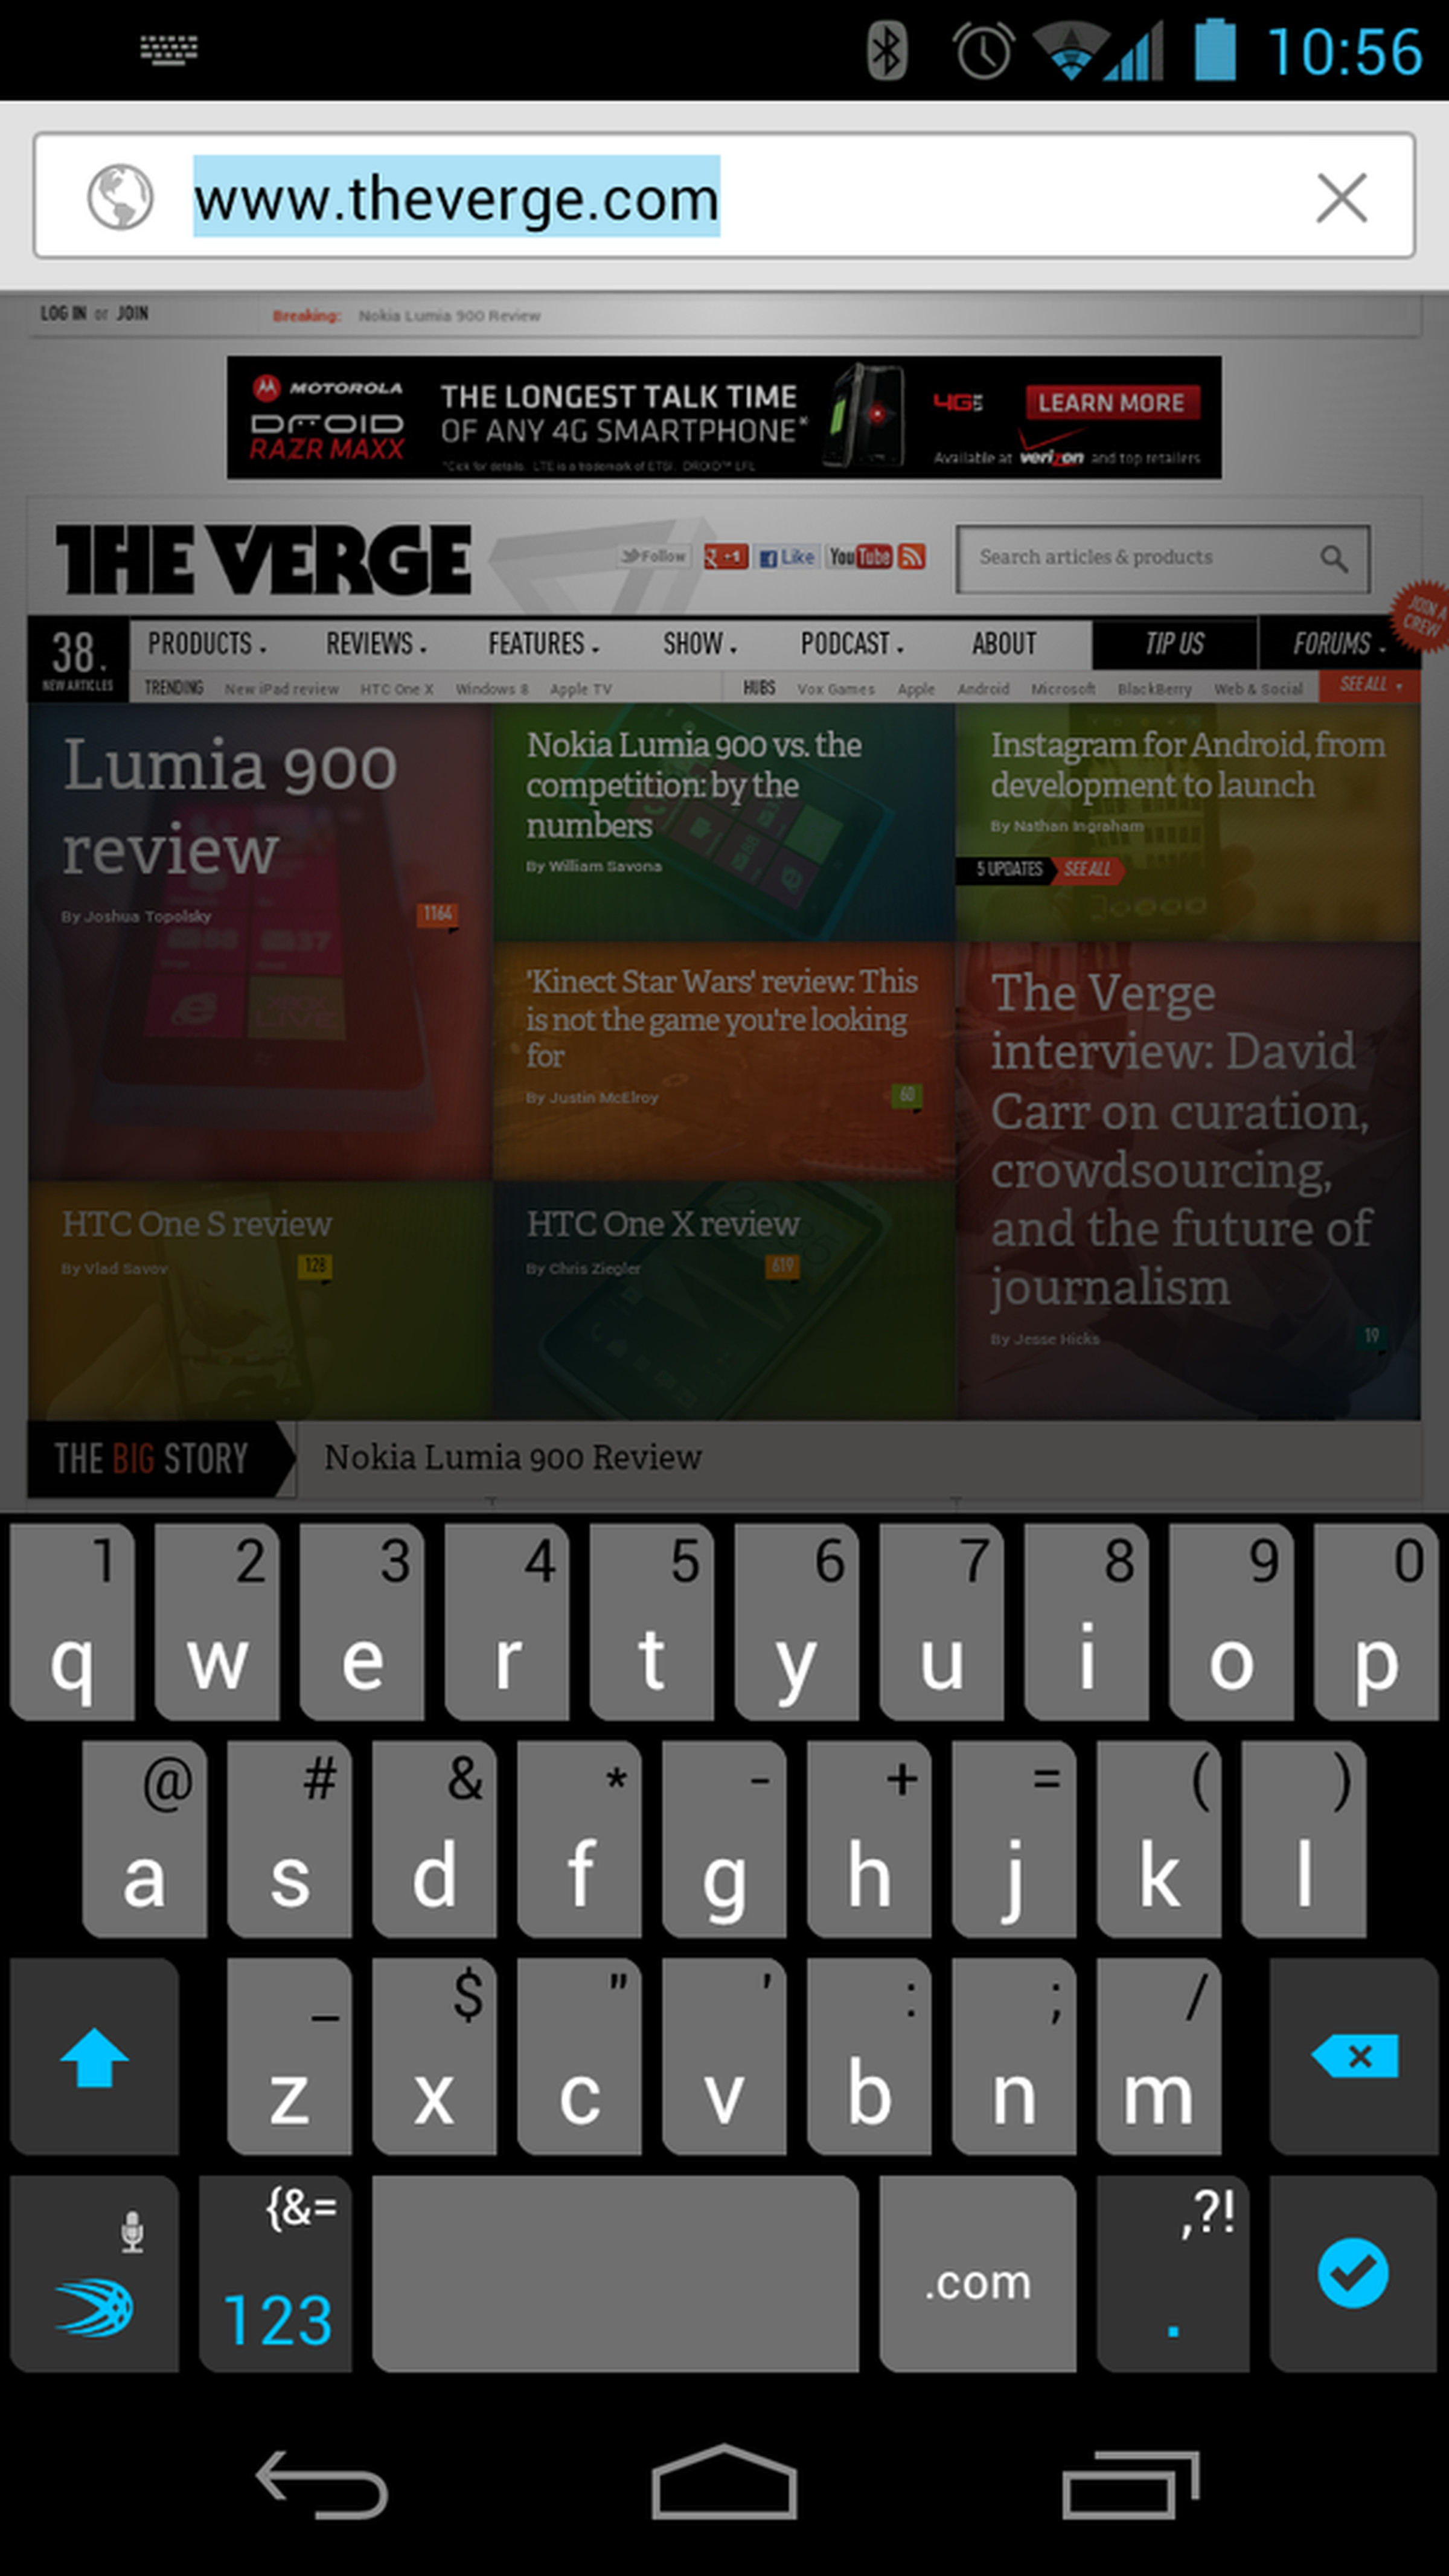 SwiftKey 3 Beta Android keyboard screenshots